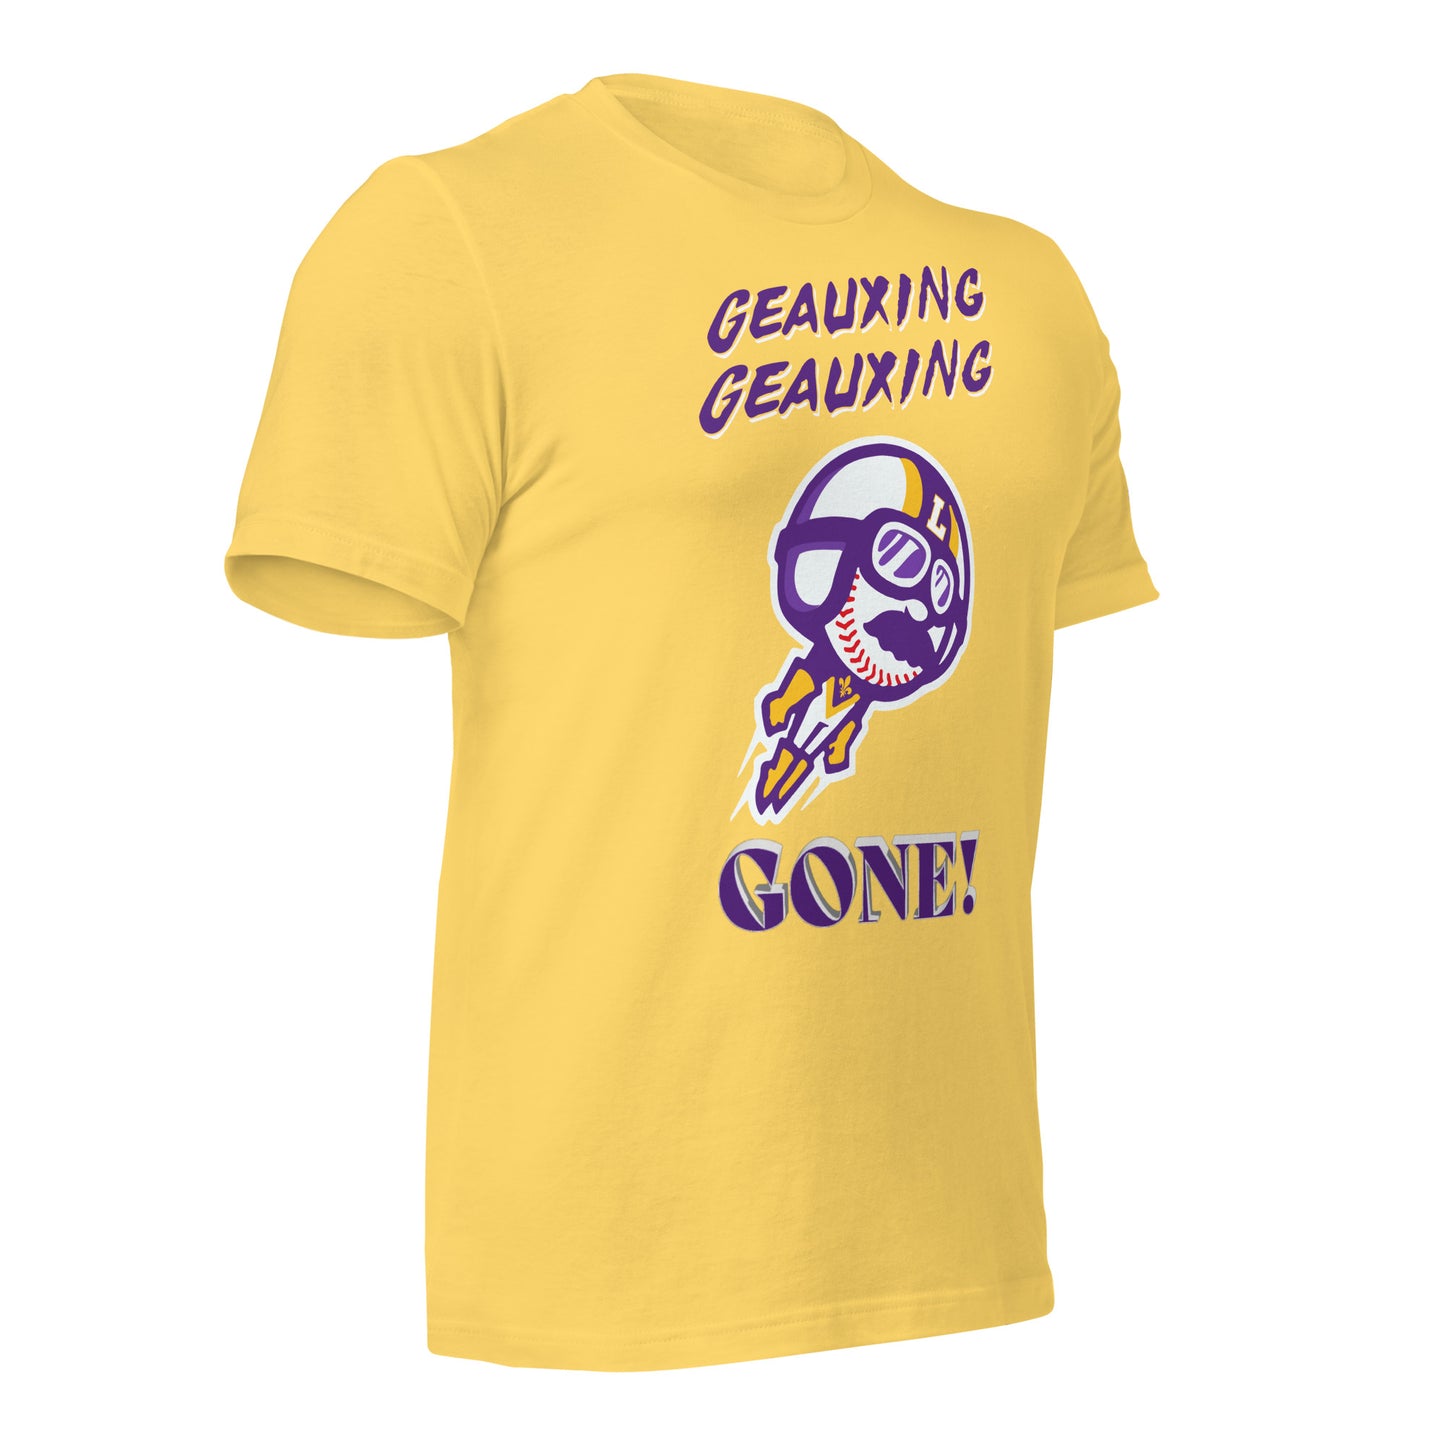 GEAUXING GEAUXING GONE V2 - BELLA+CANVAS - Unisex t-shirt